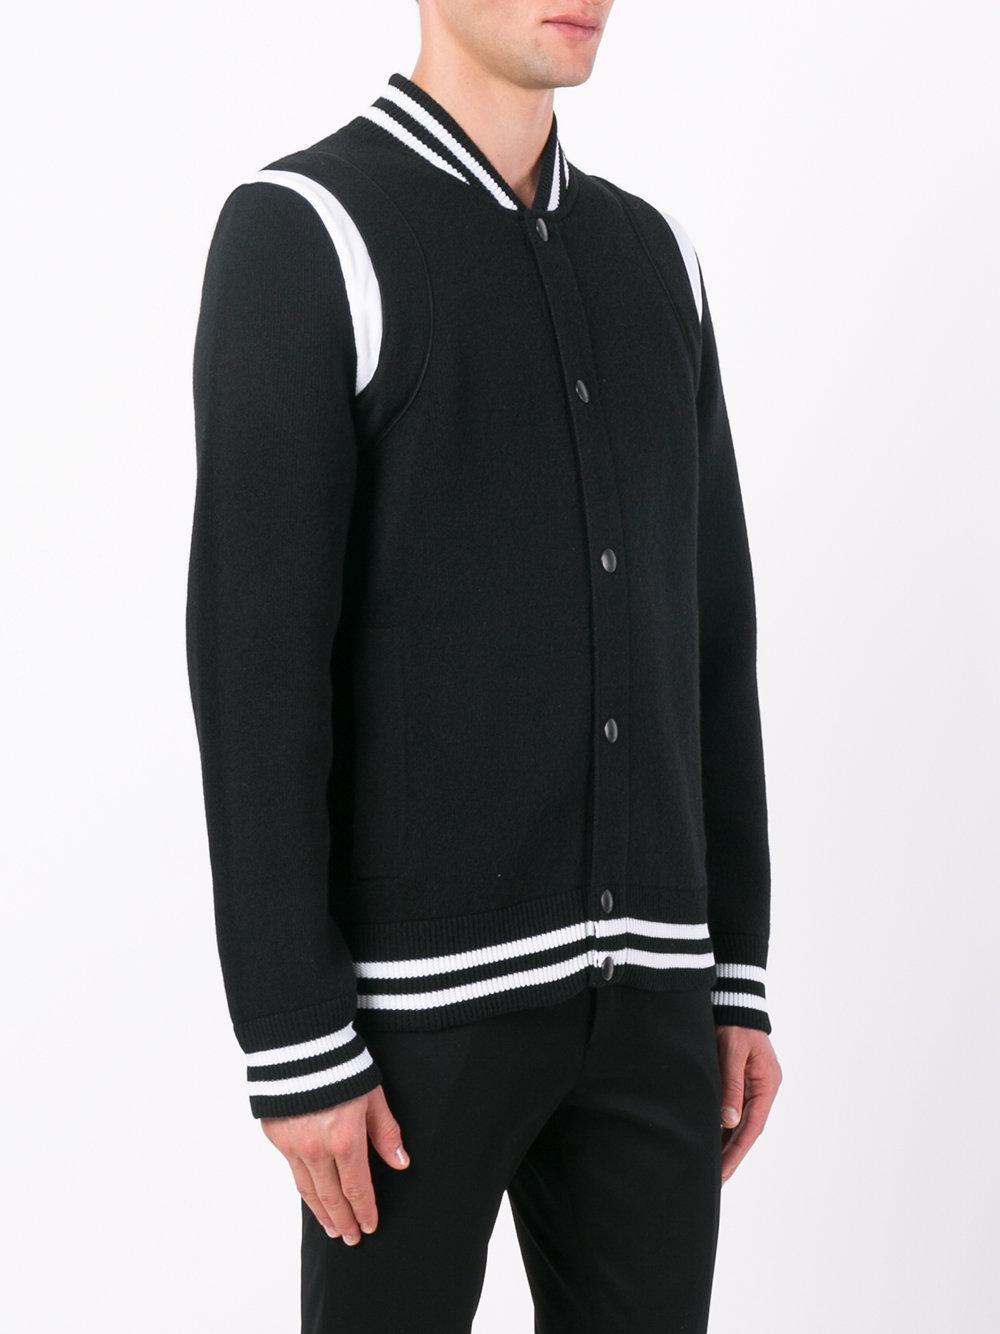 Givenchy Jersey Varsity Jacket in Black for Men - Lyst